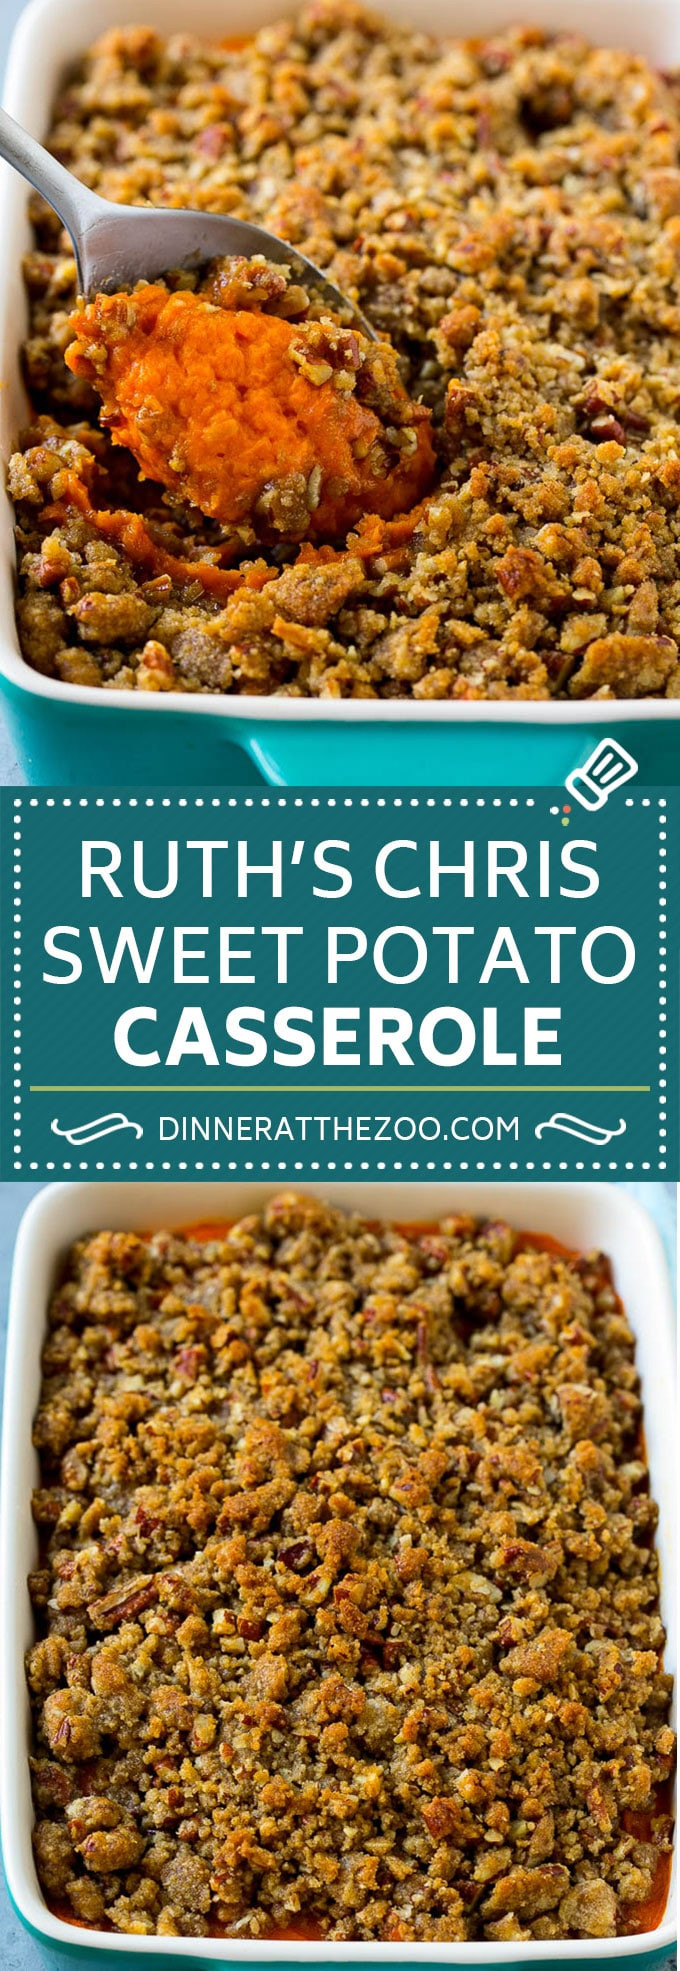 Ruth Chris Sweet Potato Recipe
 Ruth s Chris Sweet Potato Casserole Dinner at the Zoo